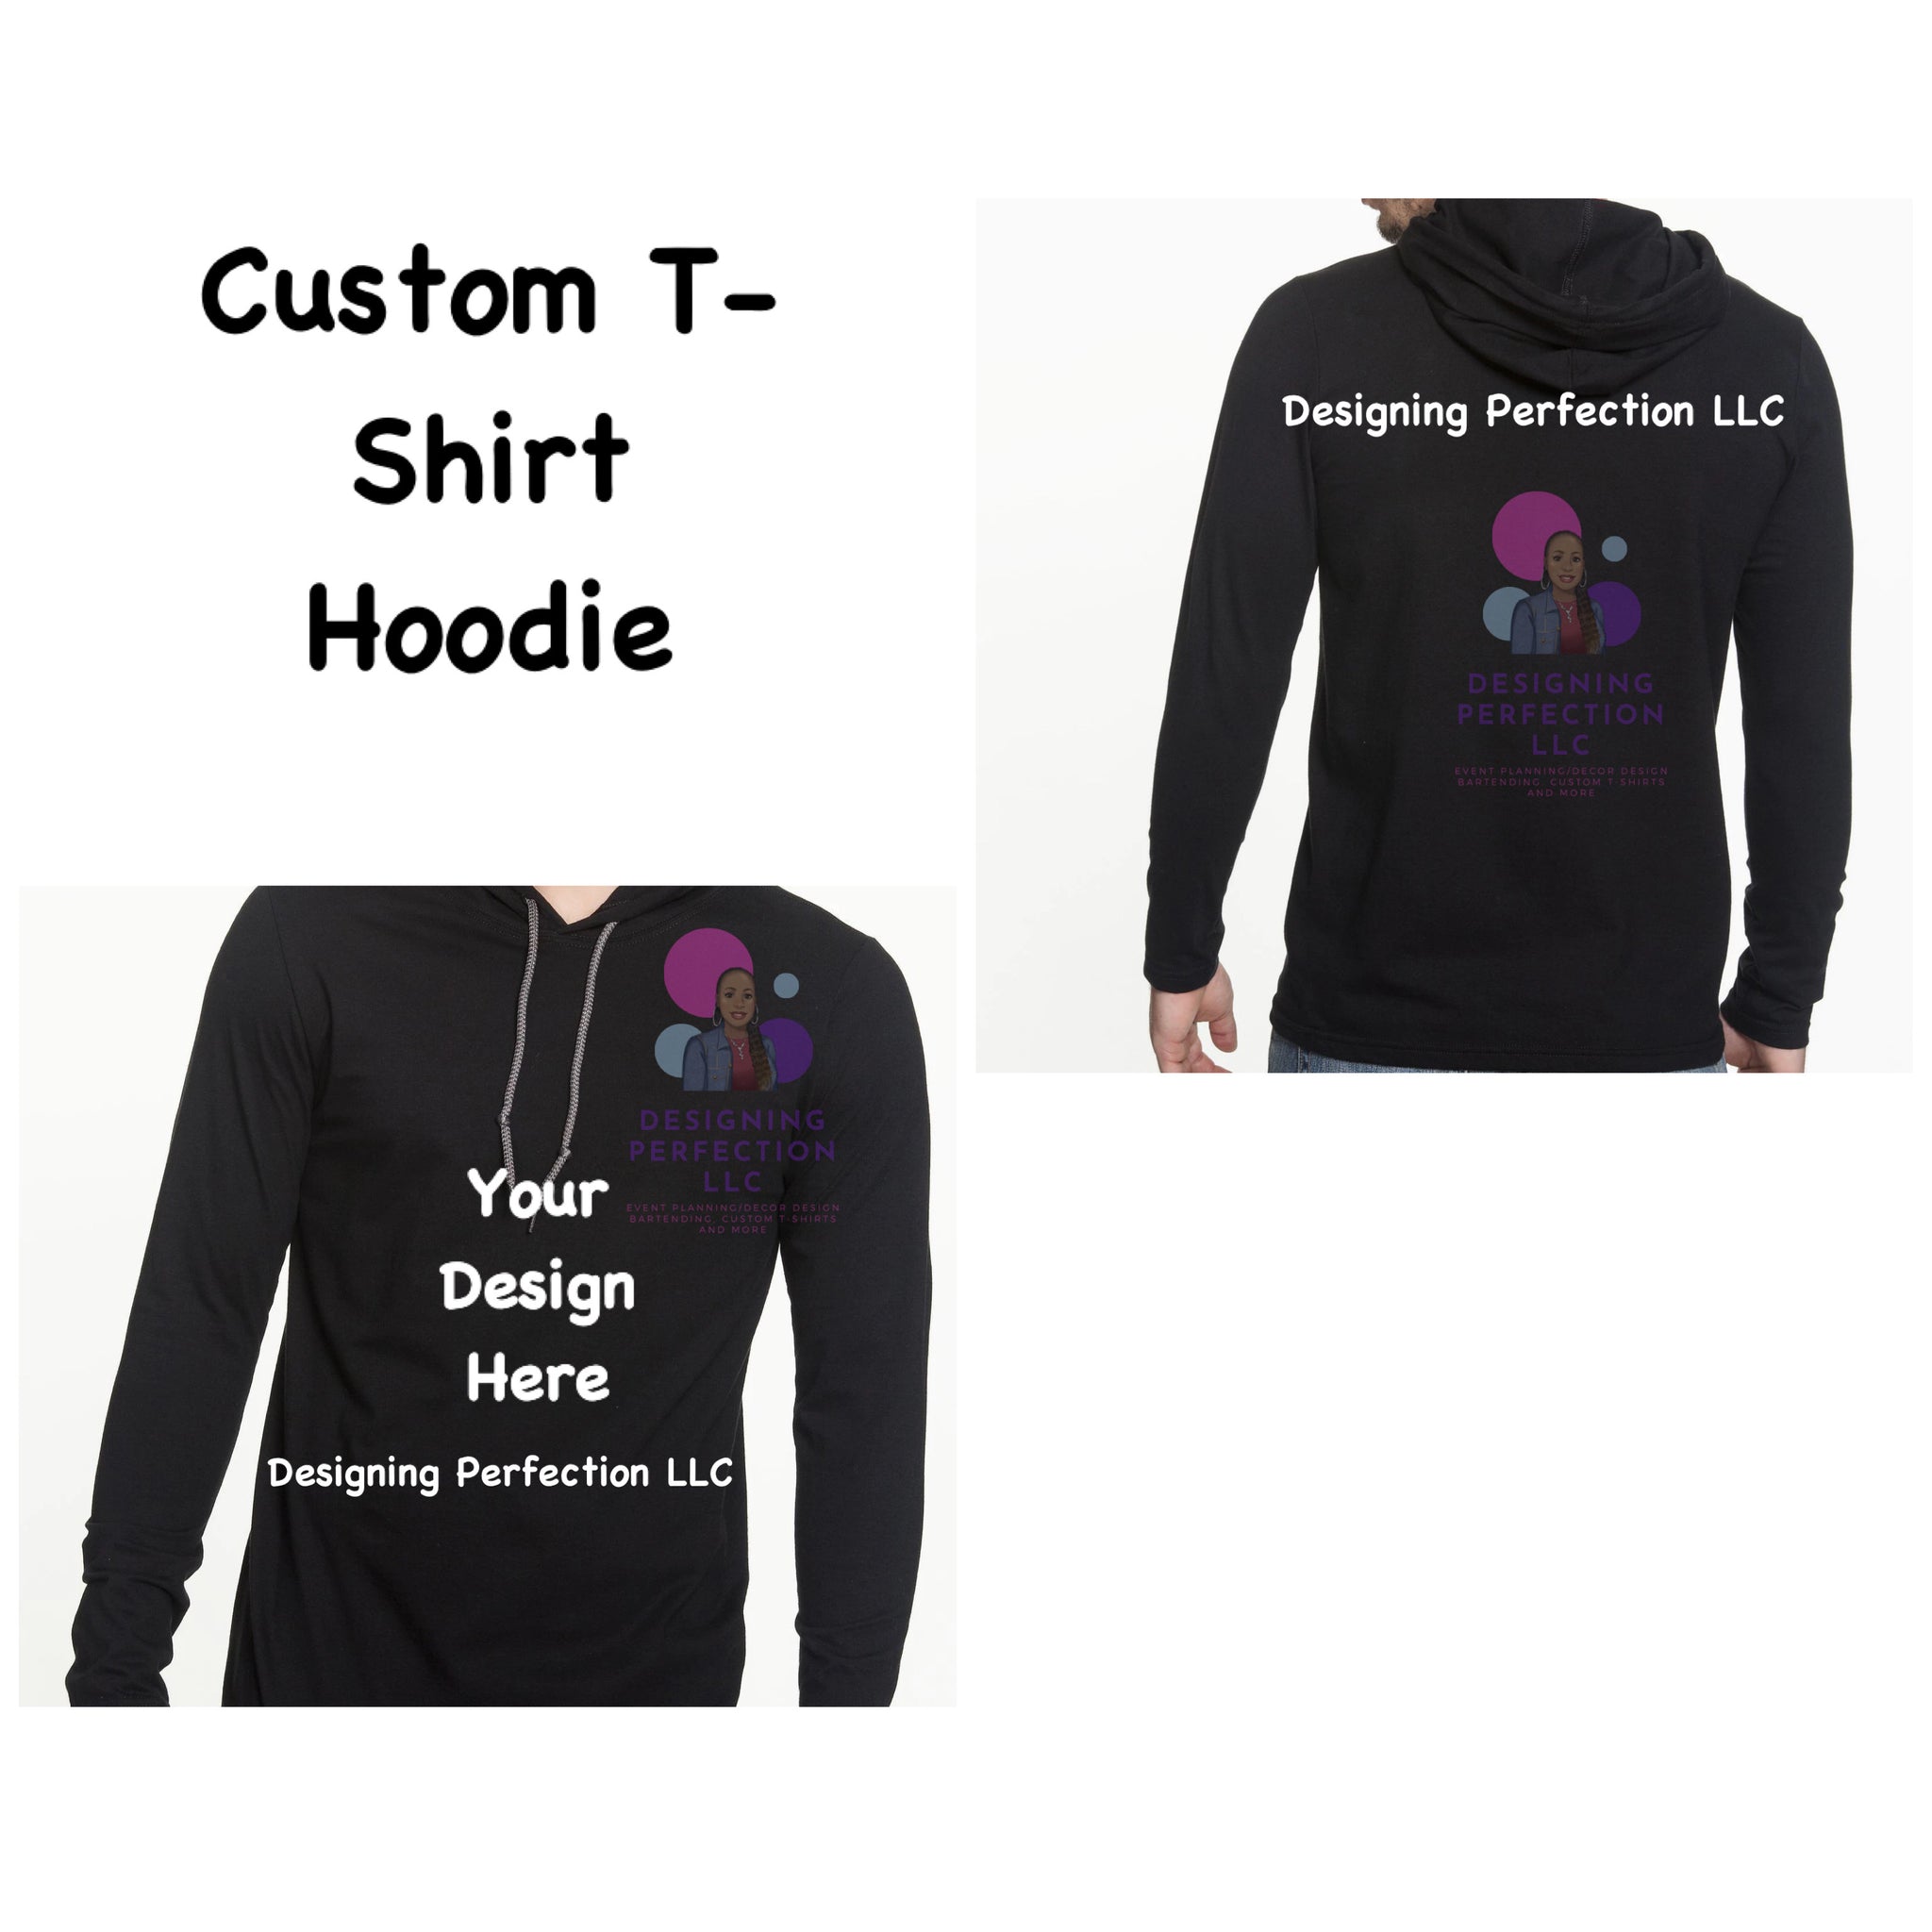 Custom T- Shirt Hoodie